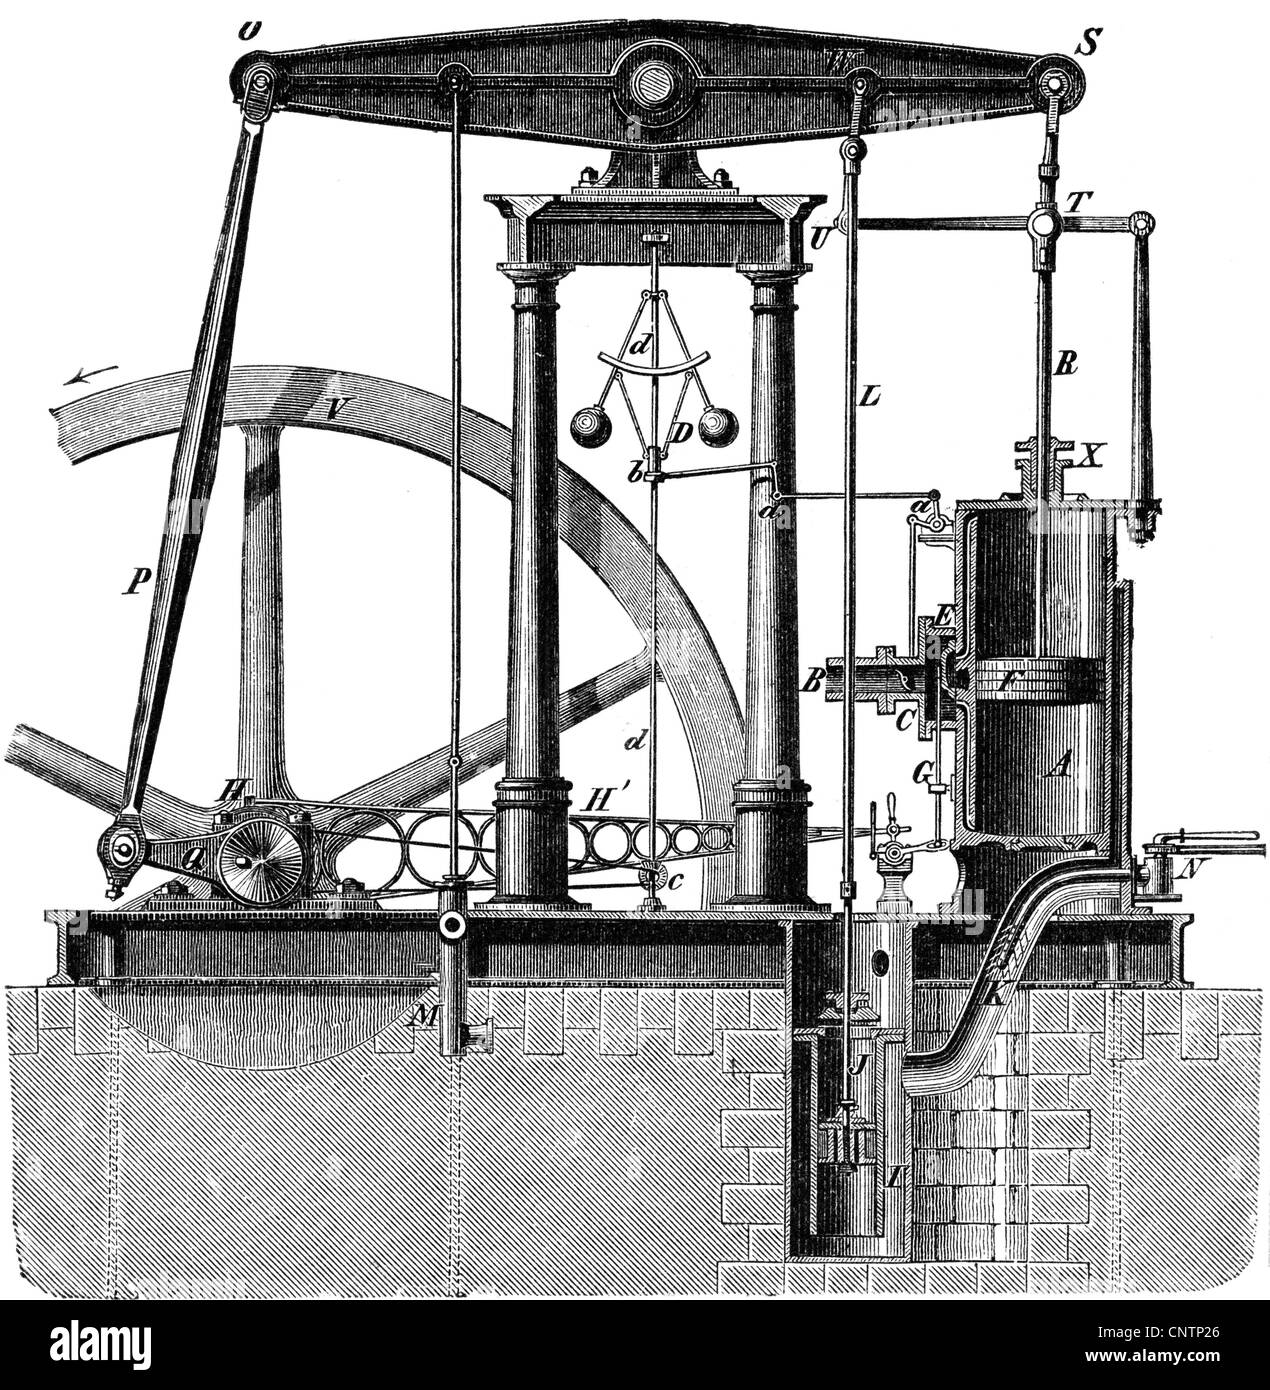 Watt, James, 19.1.1736 - 25.8.1819, Scottish engineer and inventor, his steam engine, 1776, diagram, wood engraving, 19th century, Stock Photo